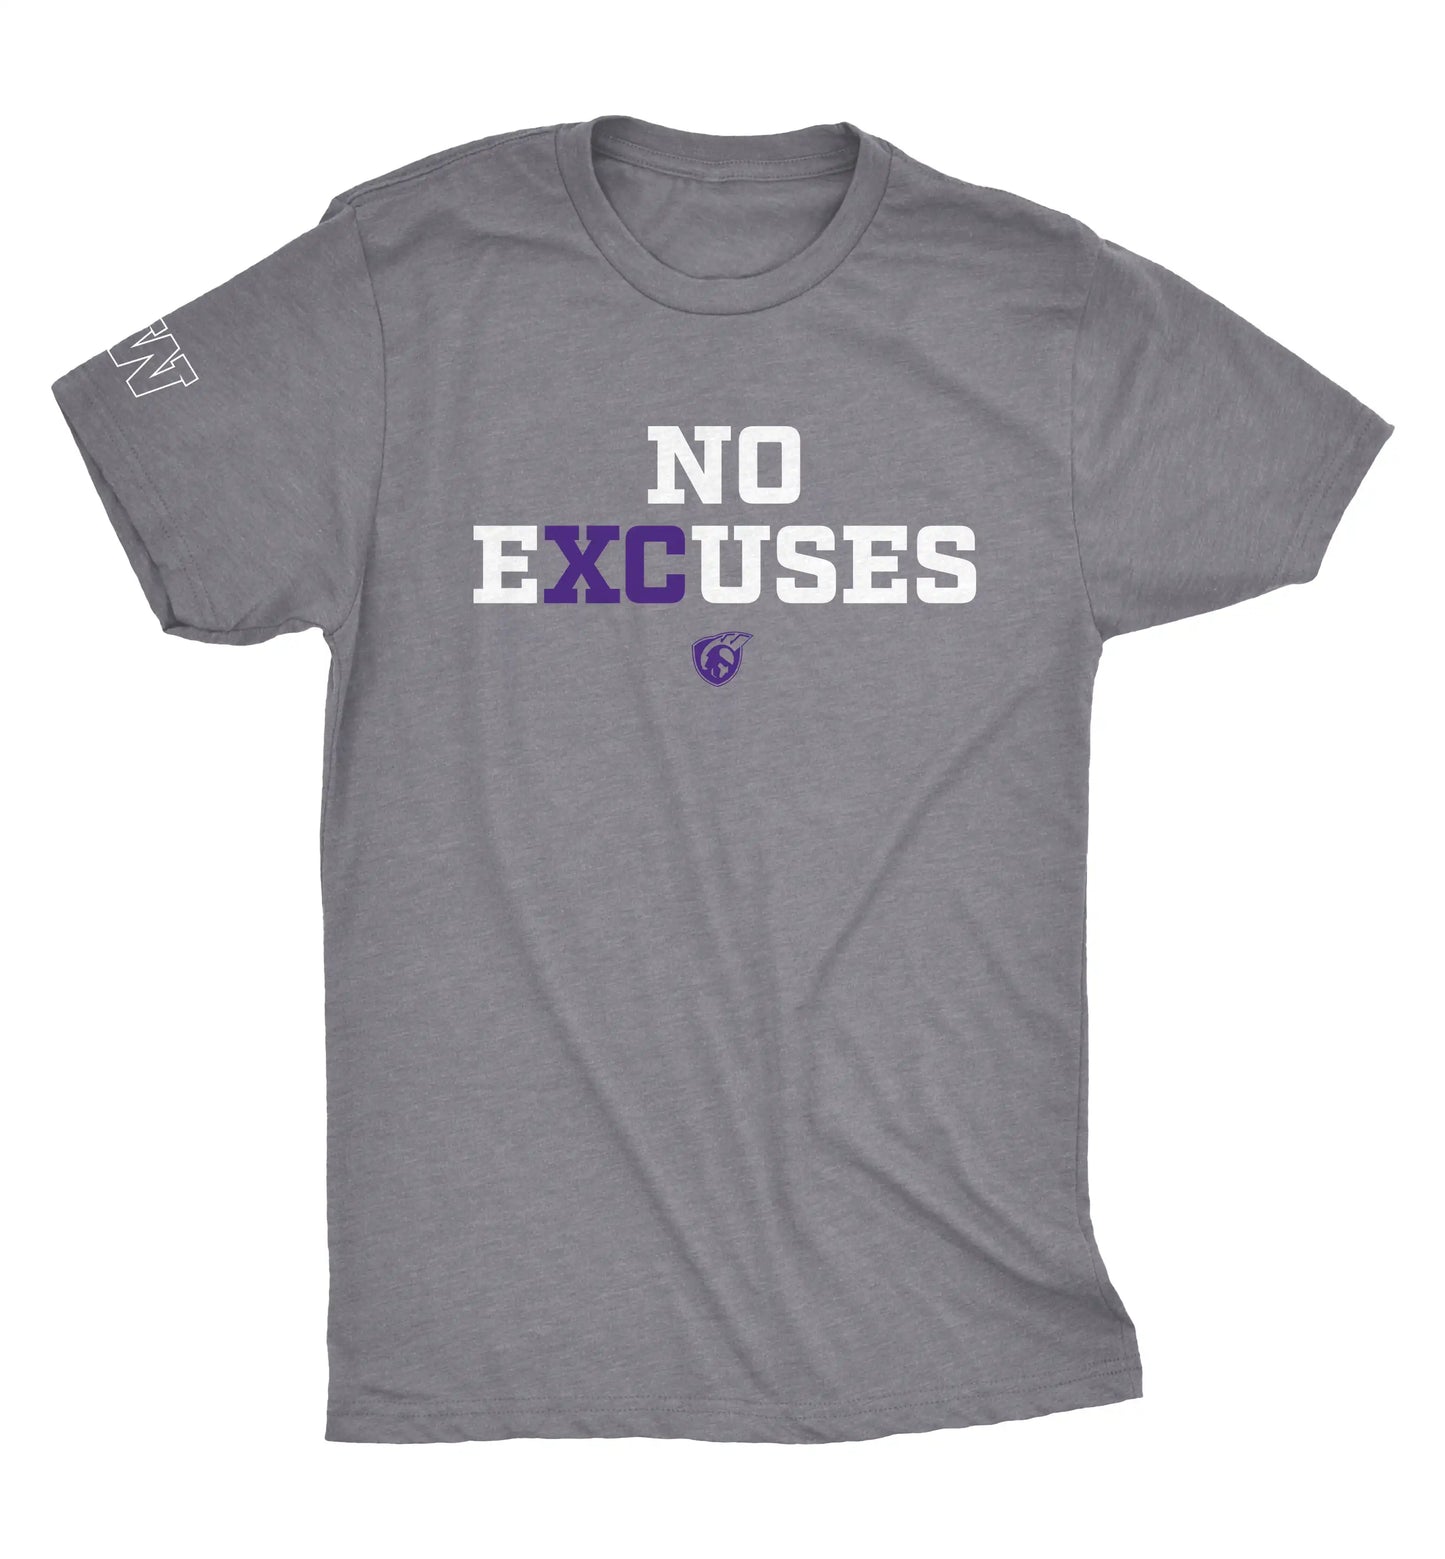 CROSS COUNTRY - No Excuses Tshirt